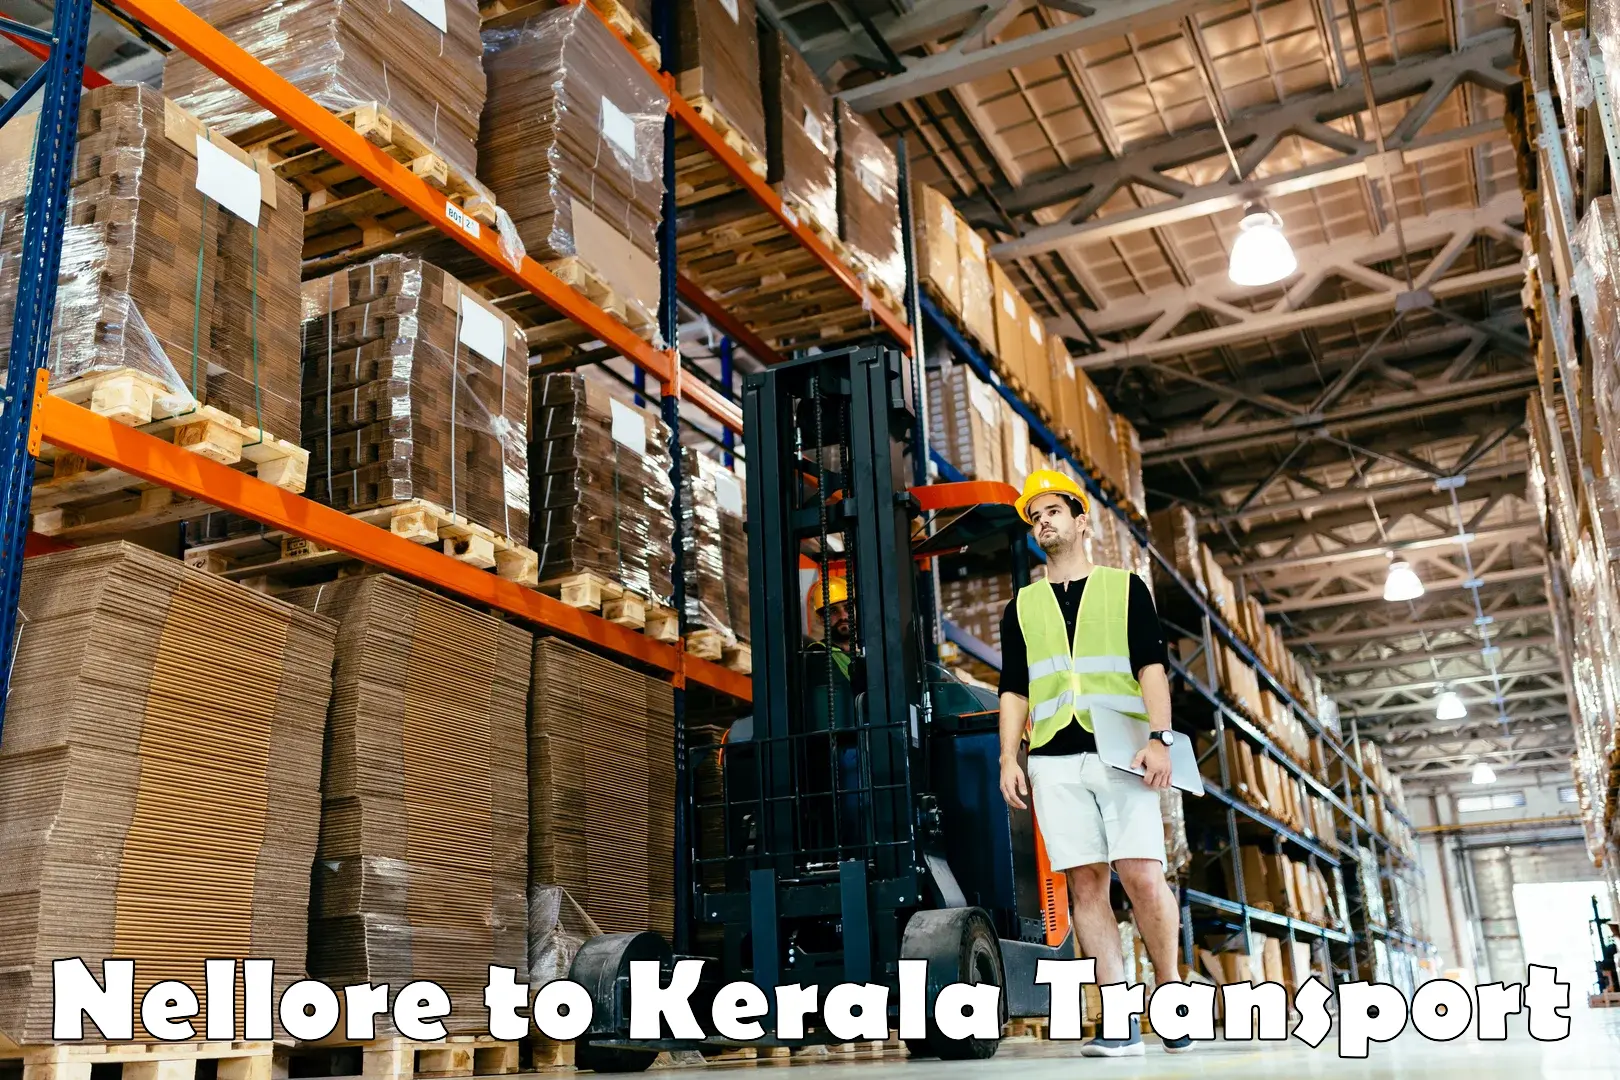 Nearby transport service Nellore to Kerala